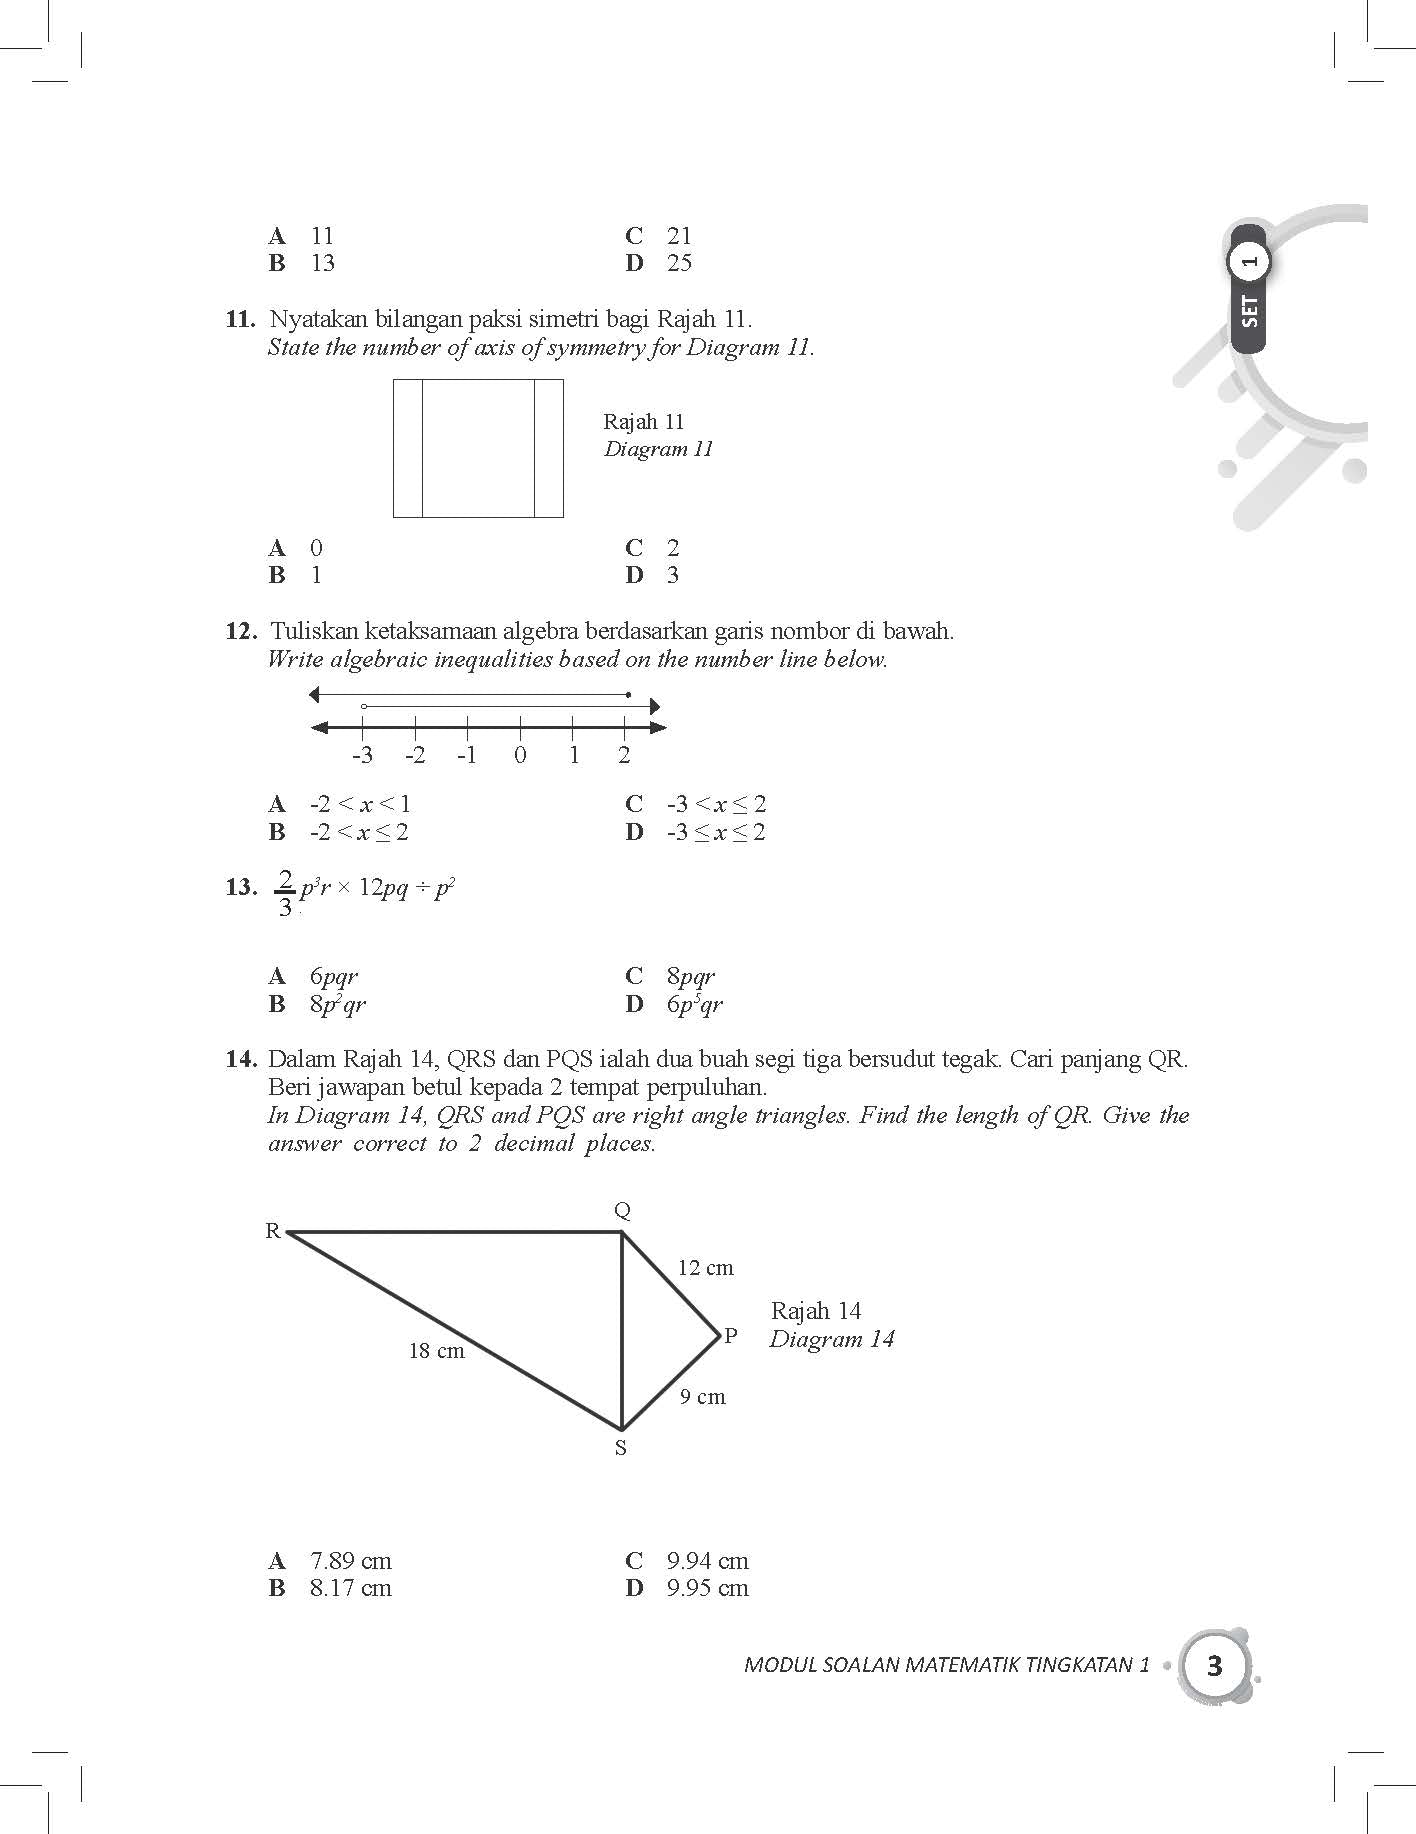 Get Smart Modul Soalan Matematik Tingkatan 1 - (TBBS1166)